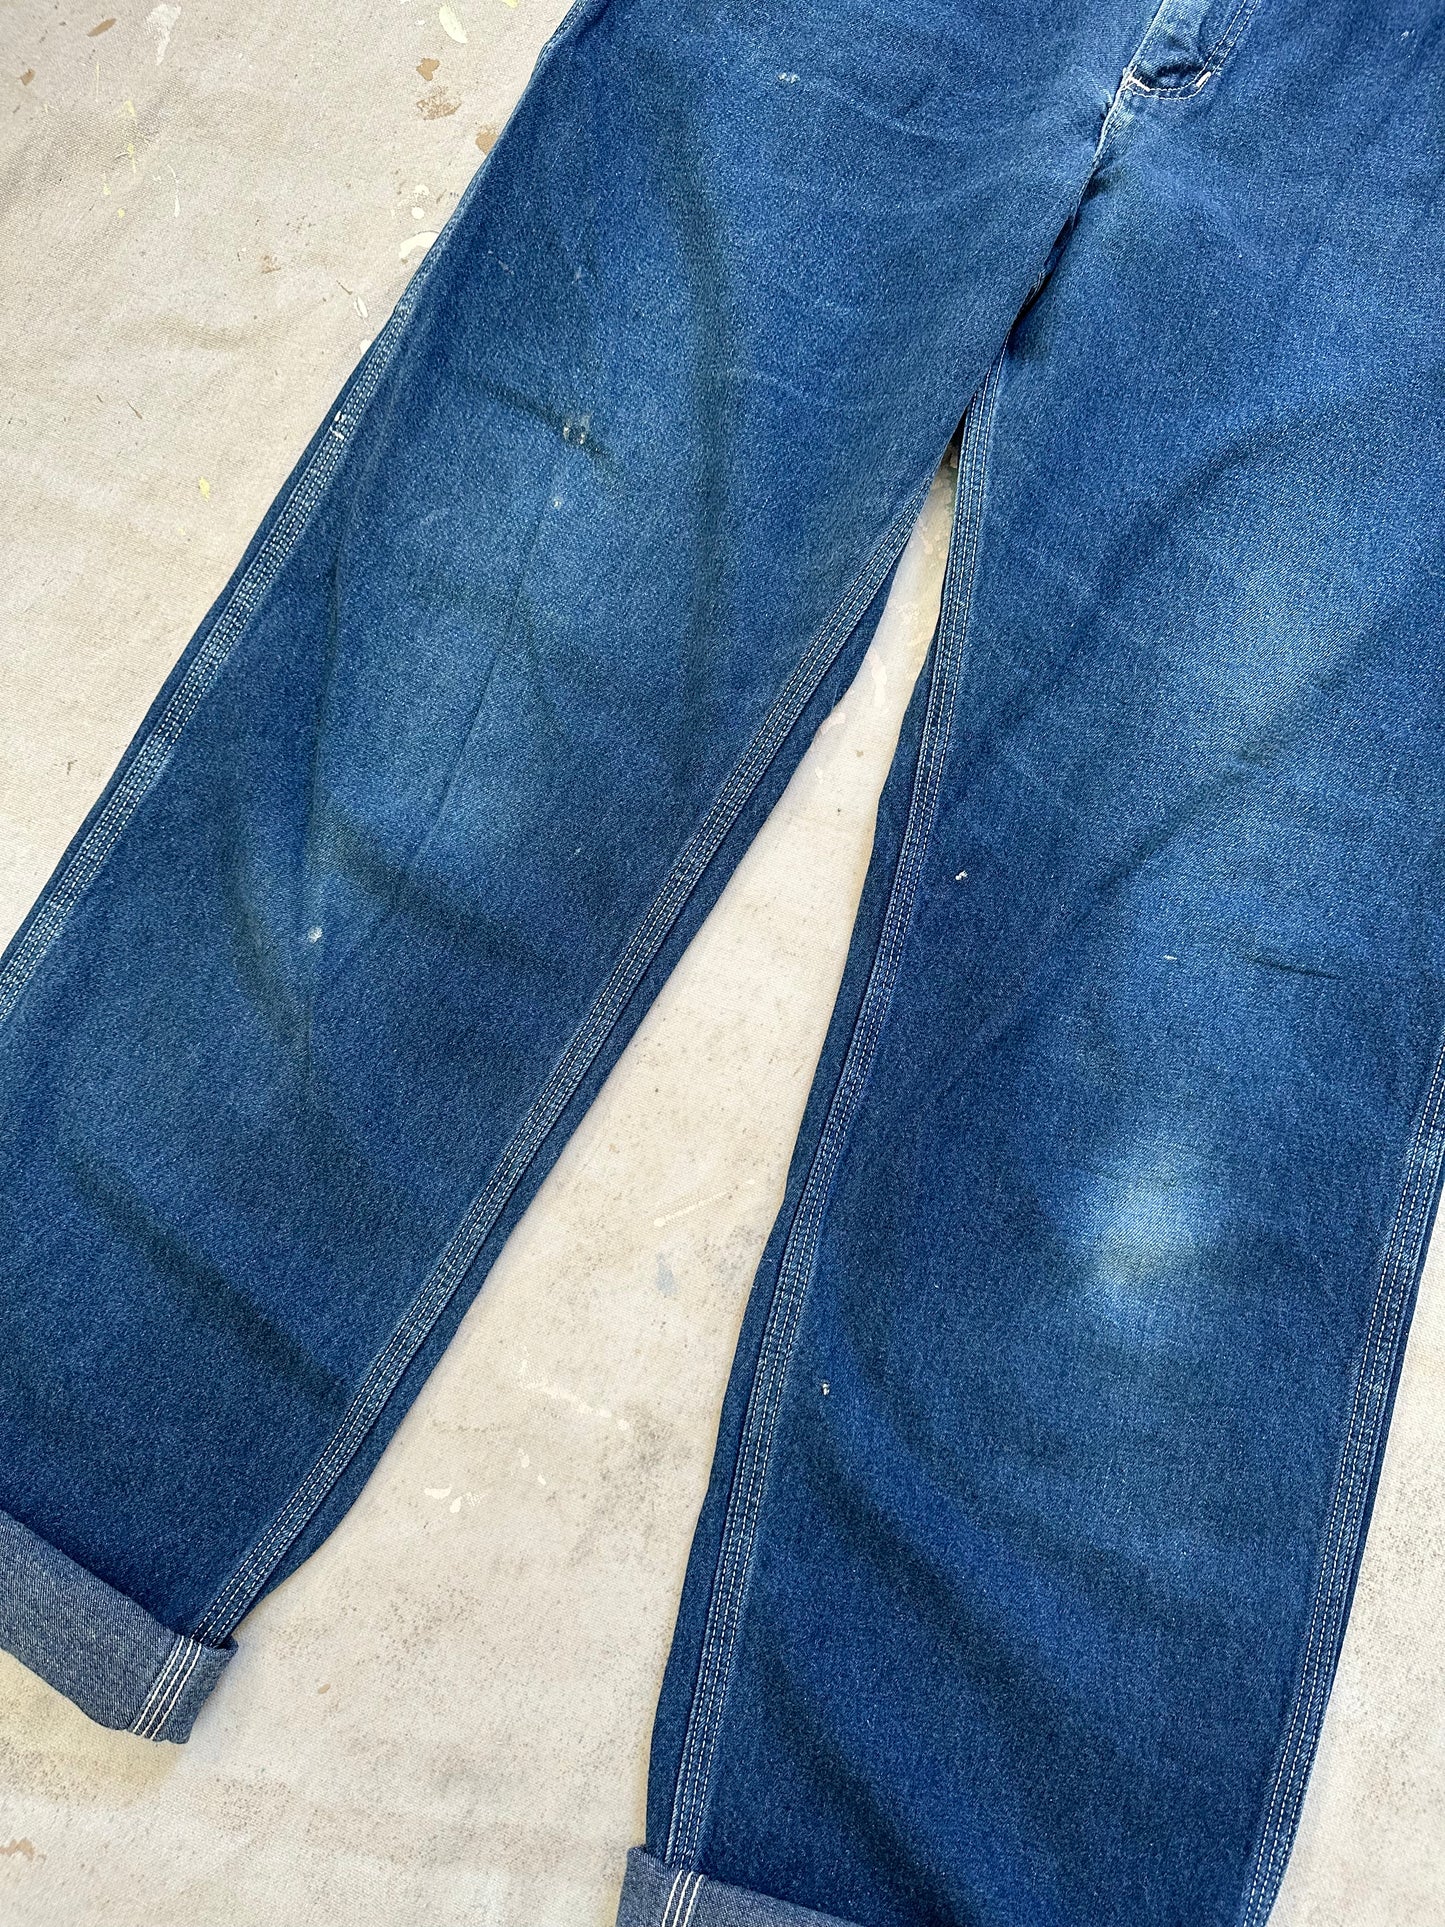 70s/80s Carhartt Carpenter Jeans